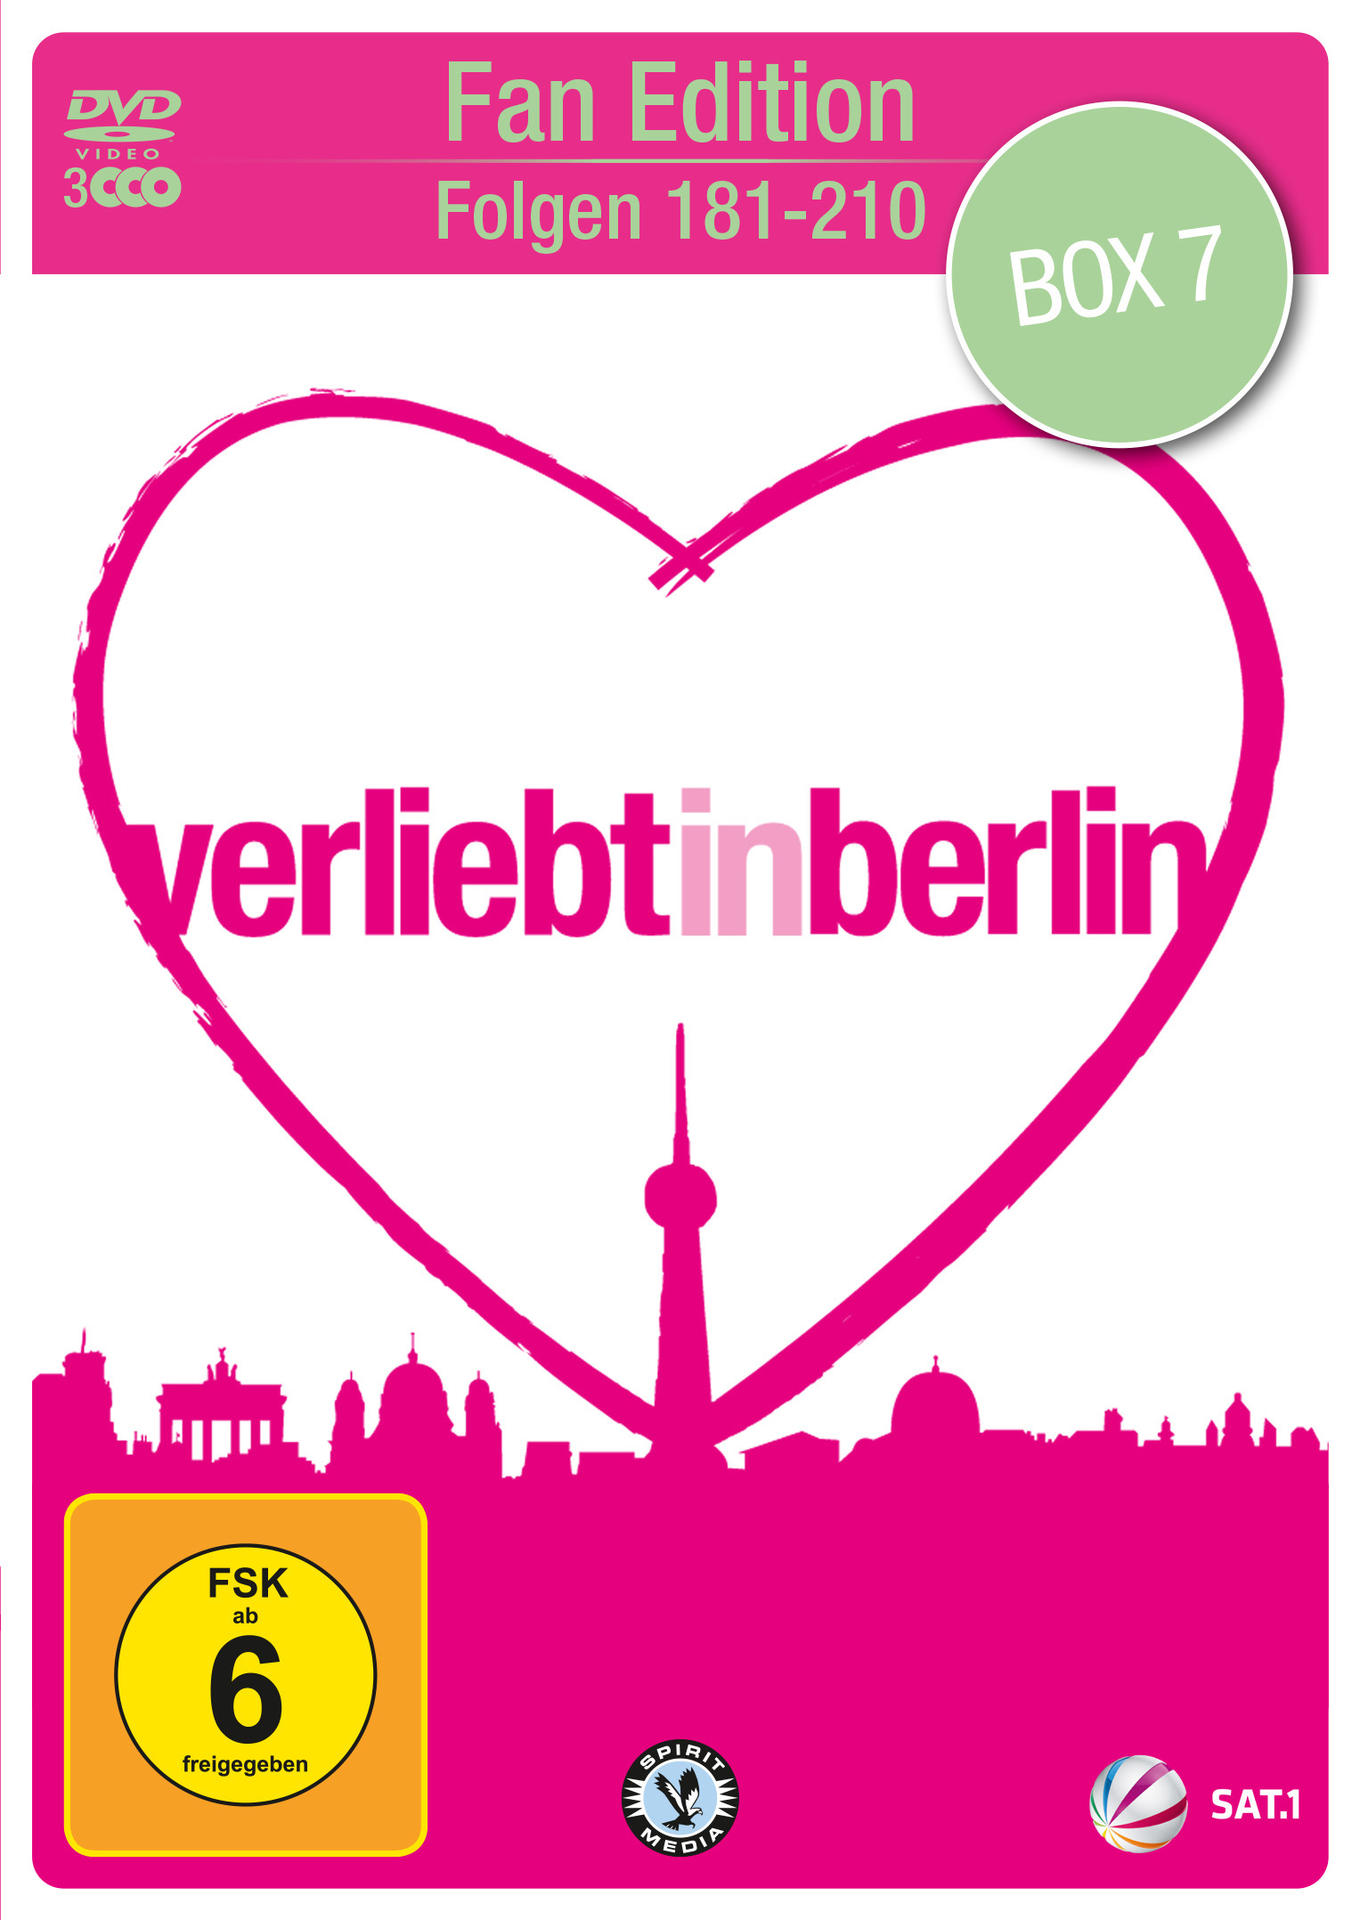 Verliebt In Berlin - DVD - Box 7 181-210 Folgen